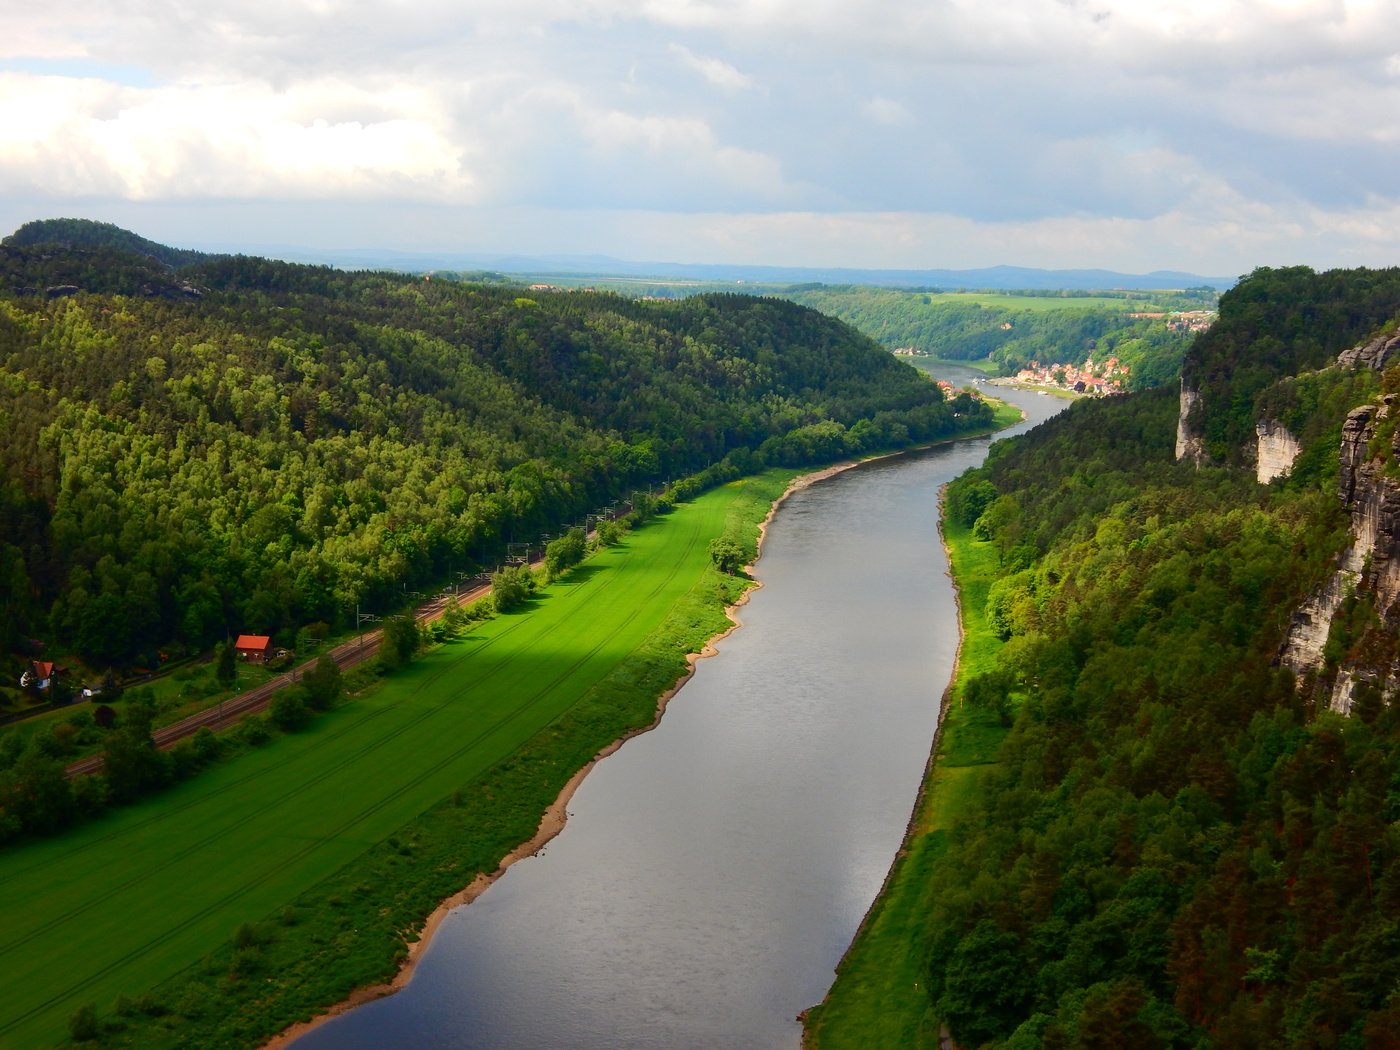 Река в германии приток мозеля. Река Эльба в Германии. Река Эльба Чехия. Река Эльба Саксония. Нижняя Саксония река Эльбе.